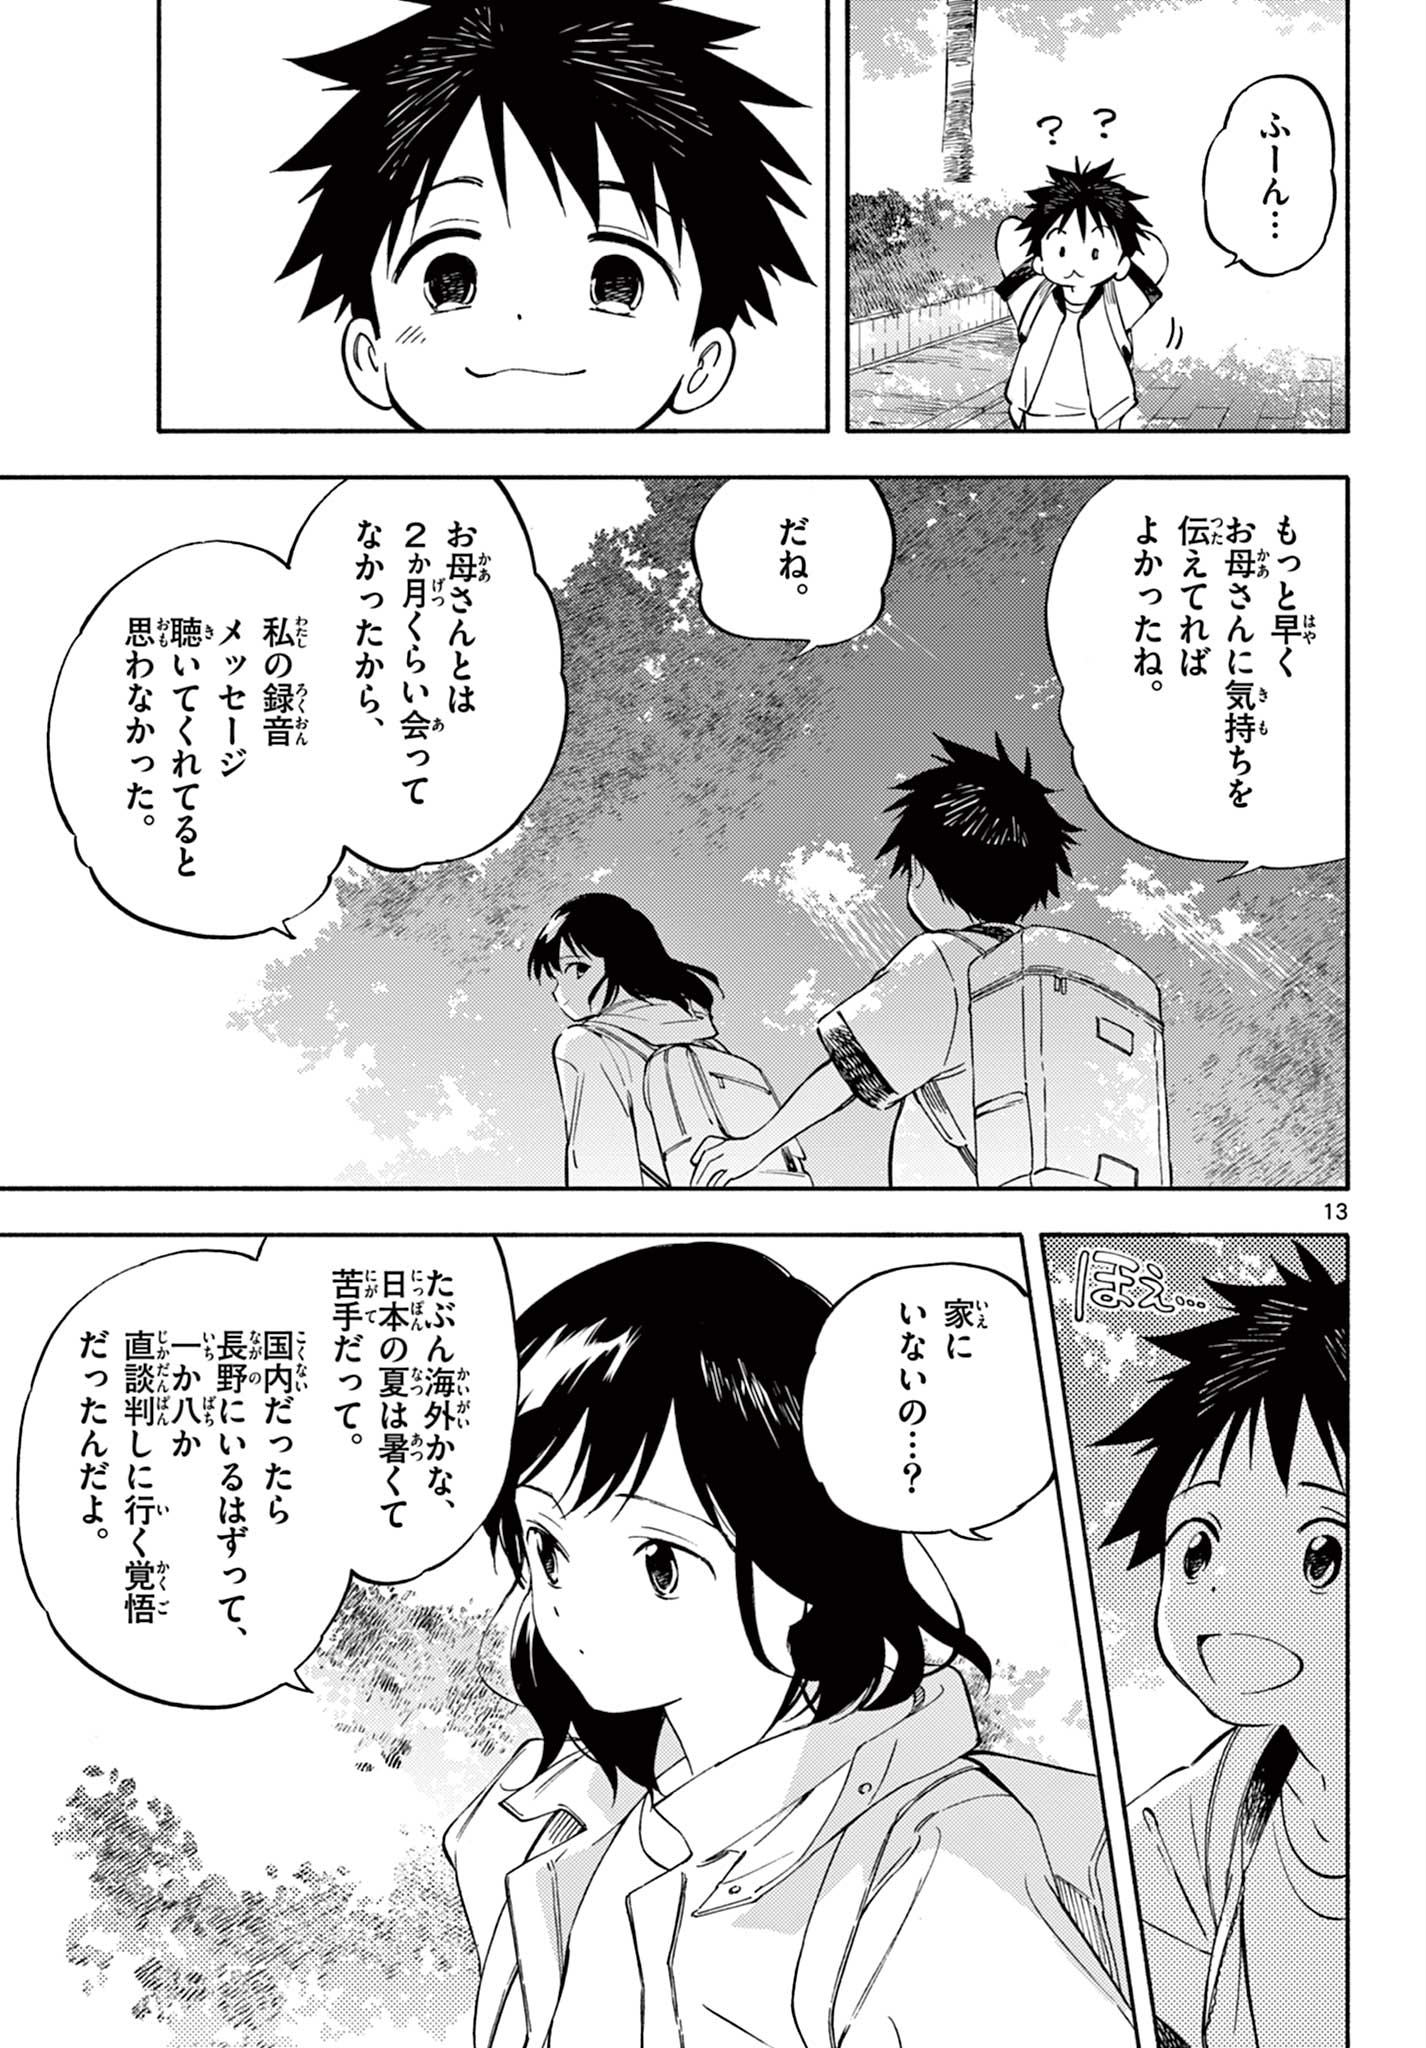 Nami no Shijima no Horizont - Chapter 14.2 - Page 1